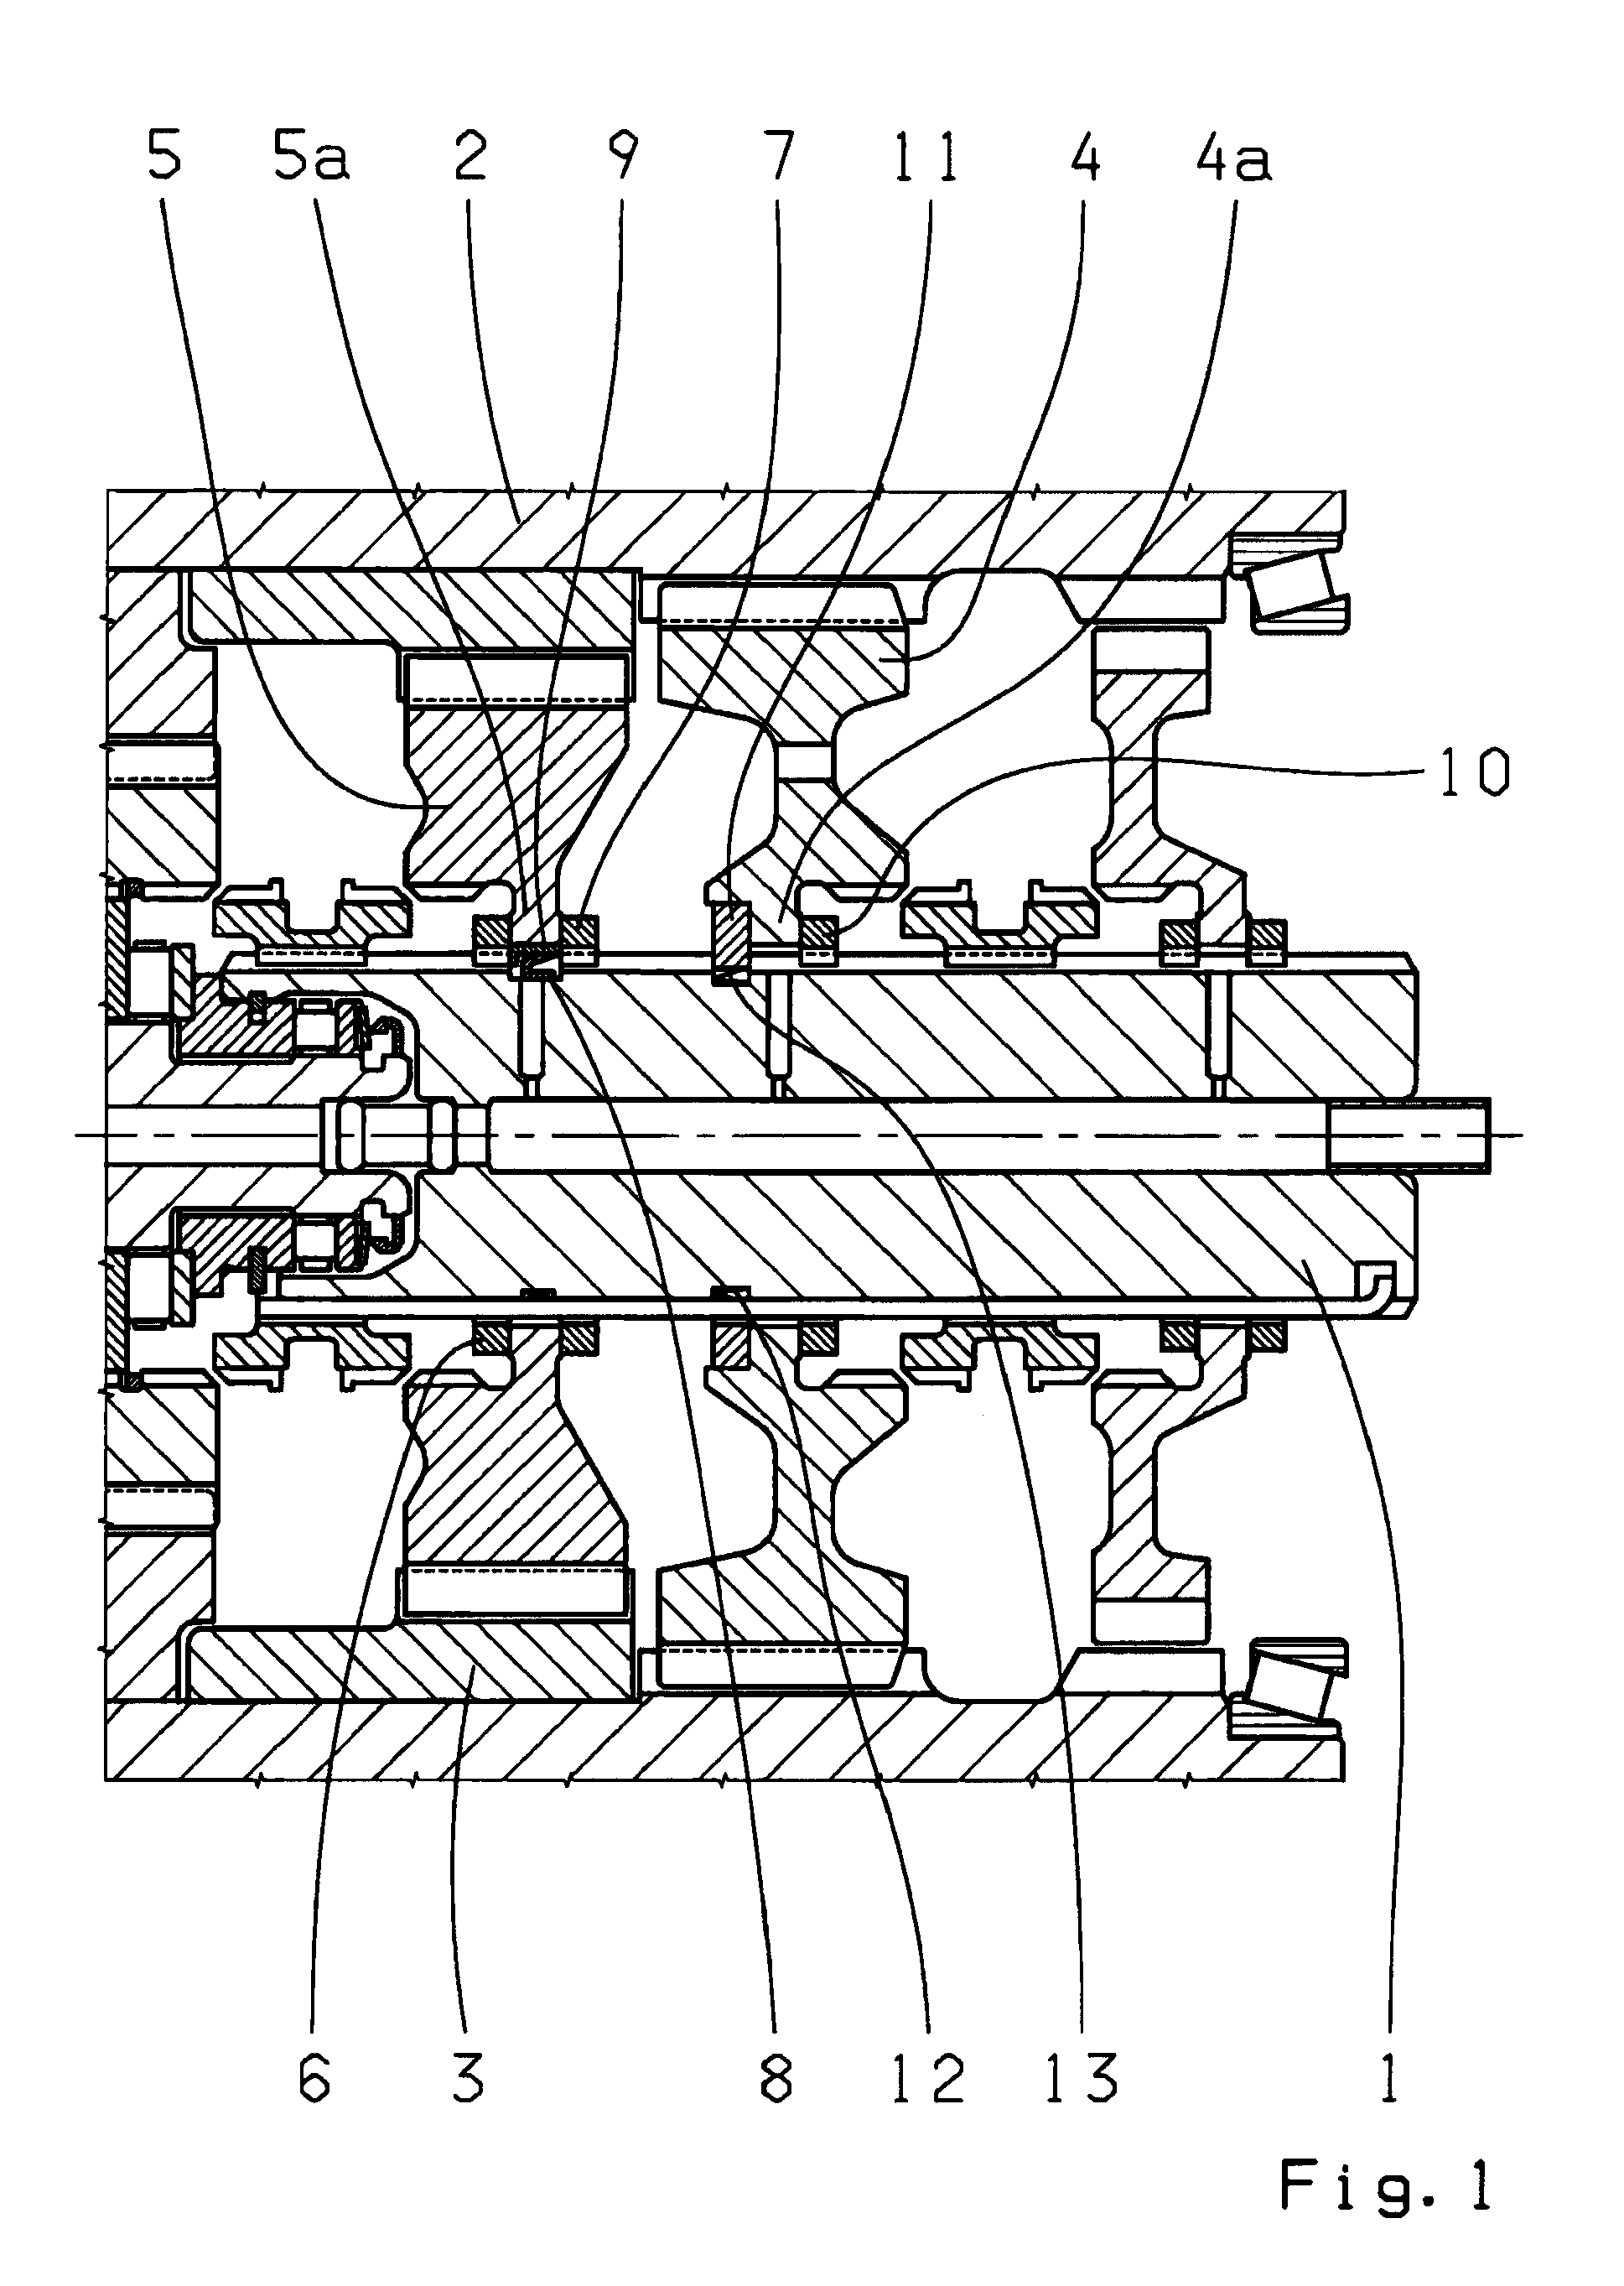 Arrangement of a gear on an output shaft of a transmission